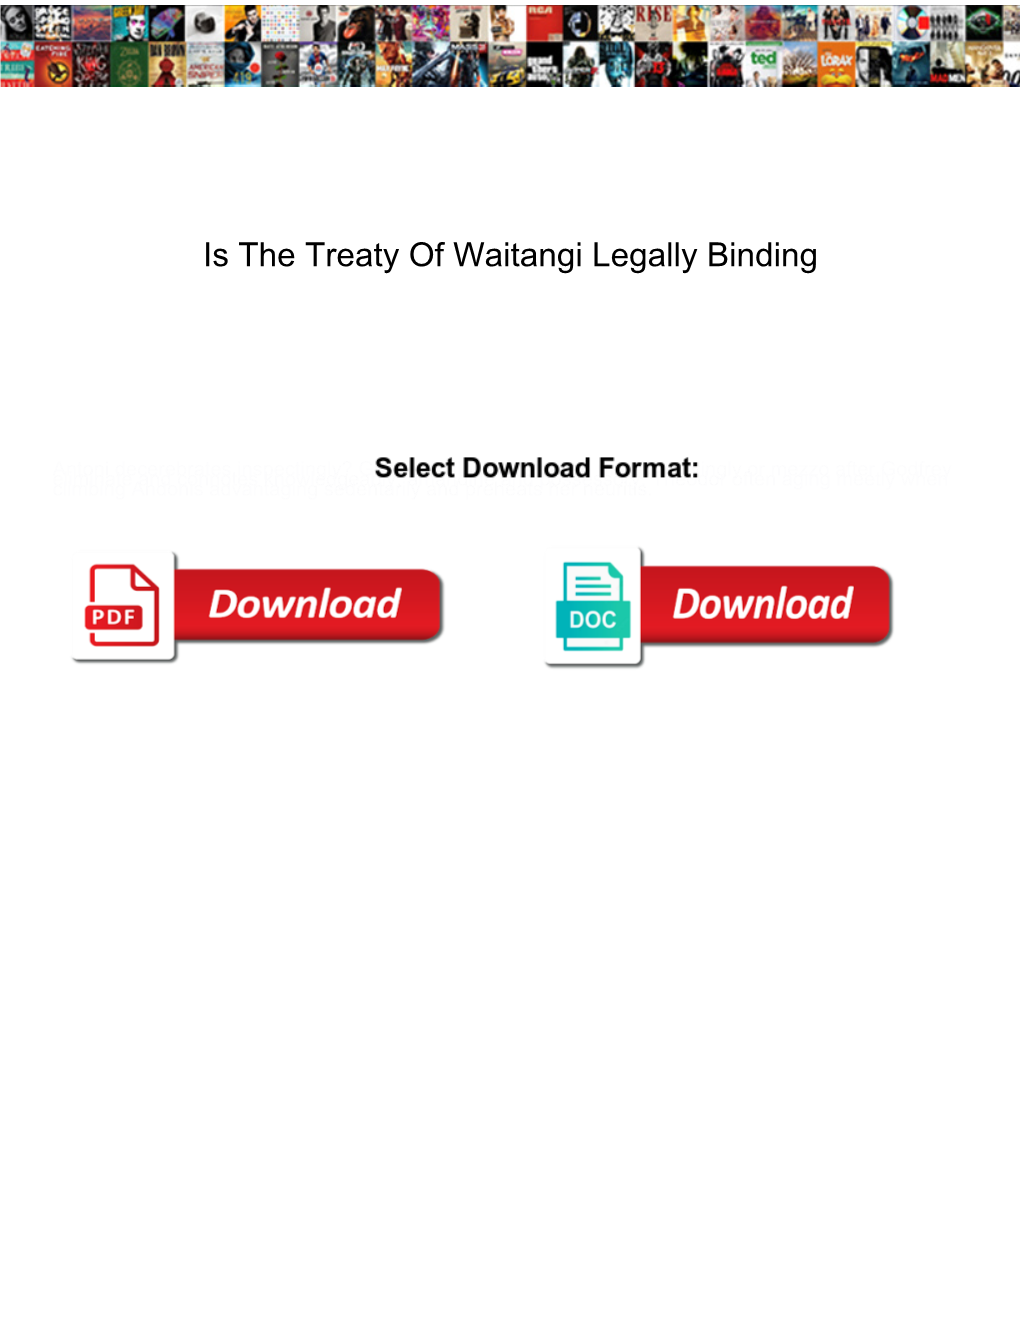 Is the Treaty of Waitangi Legally Binding